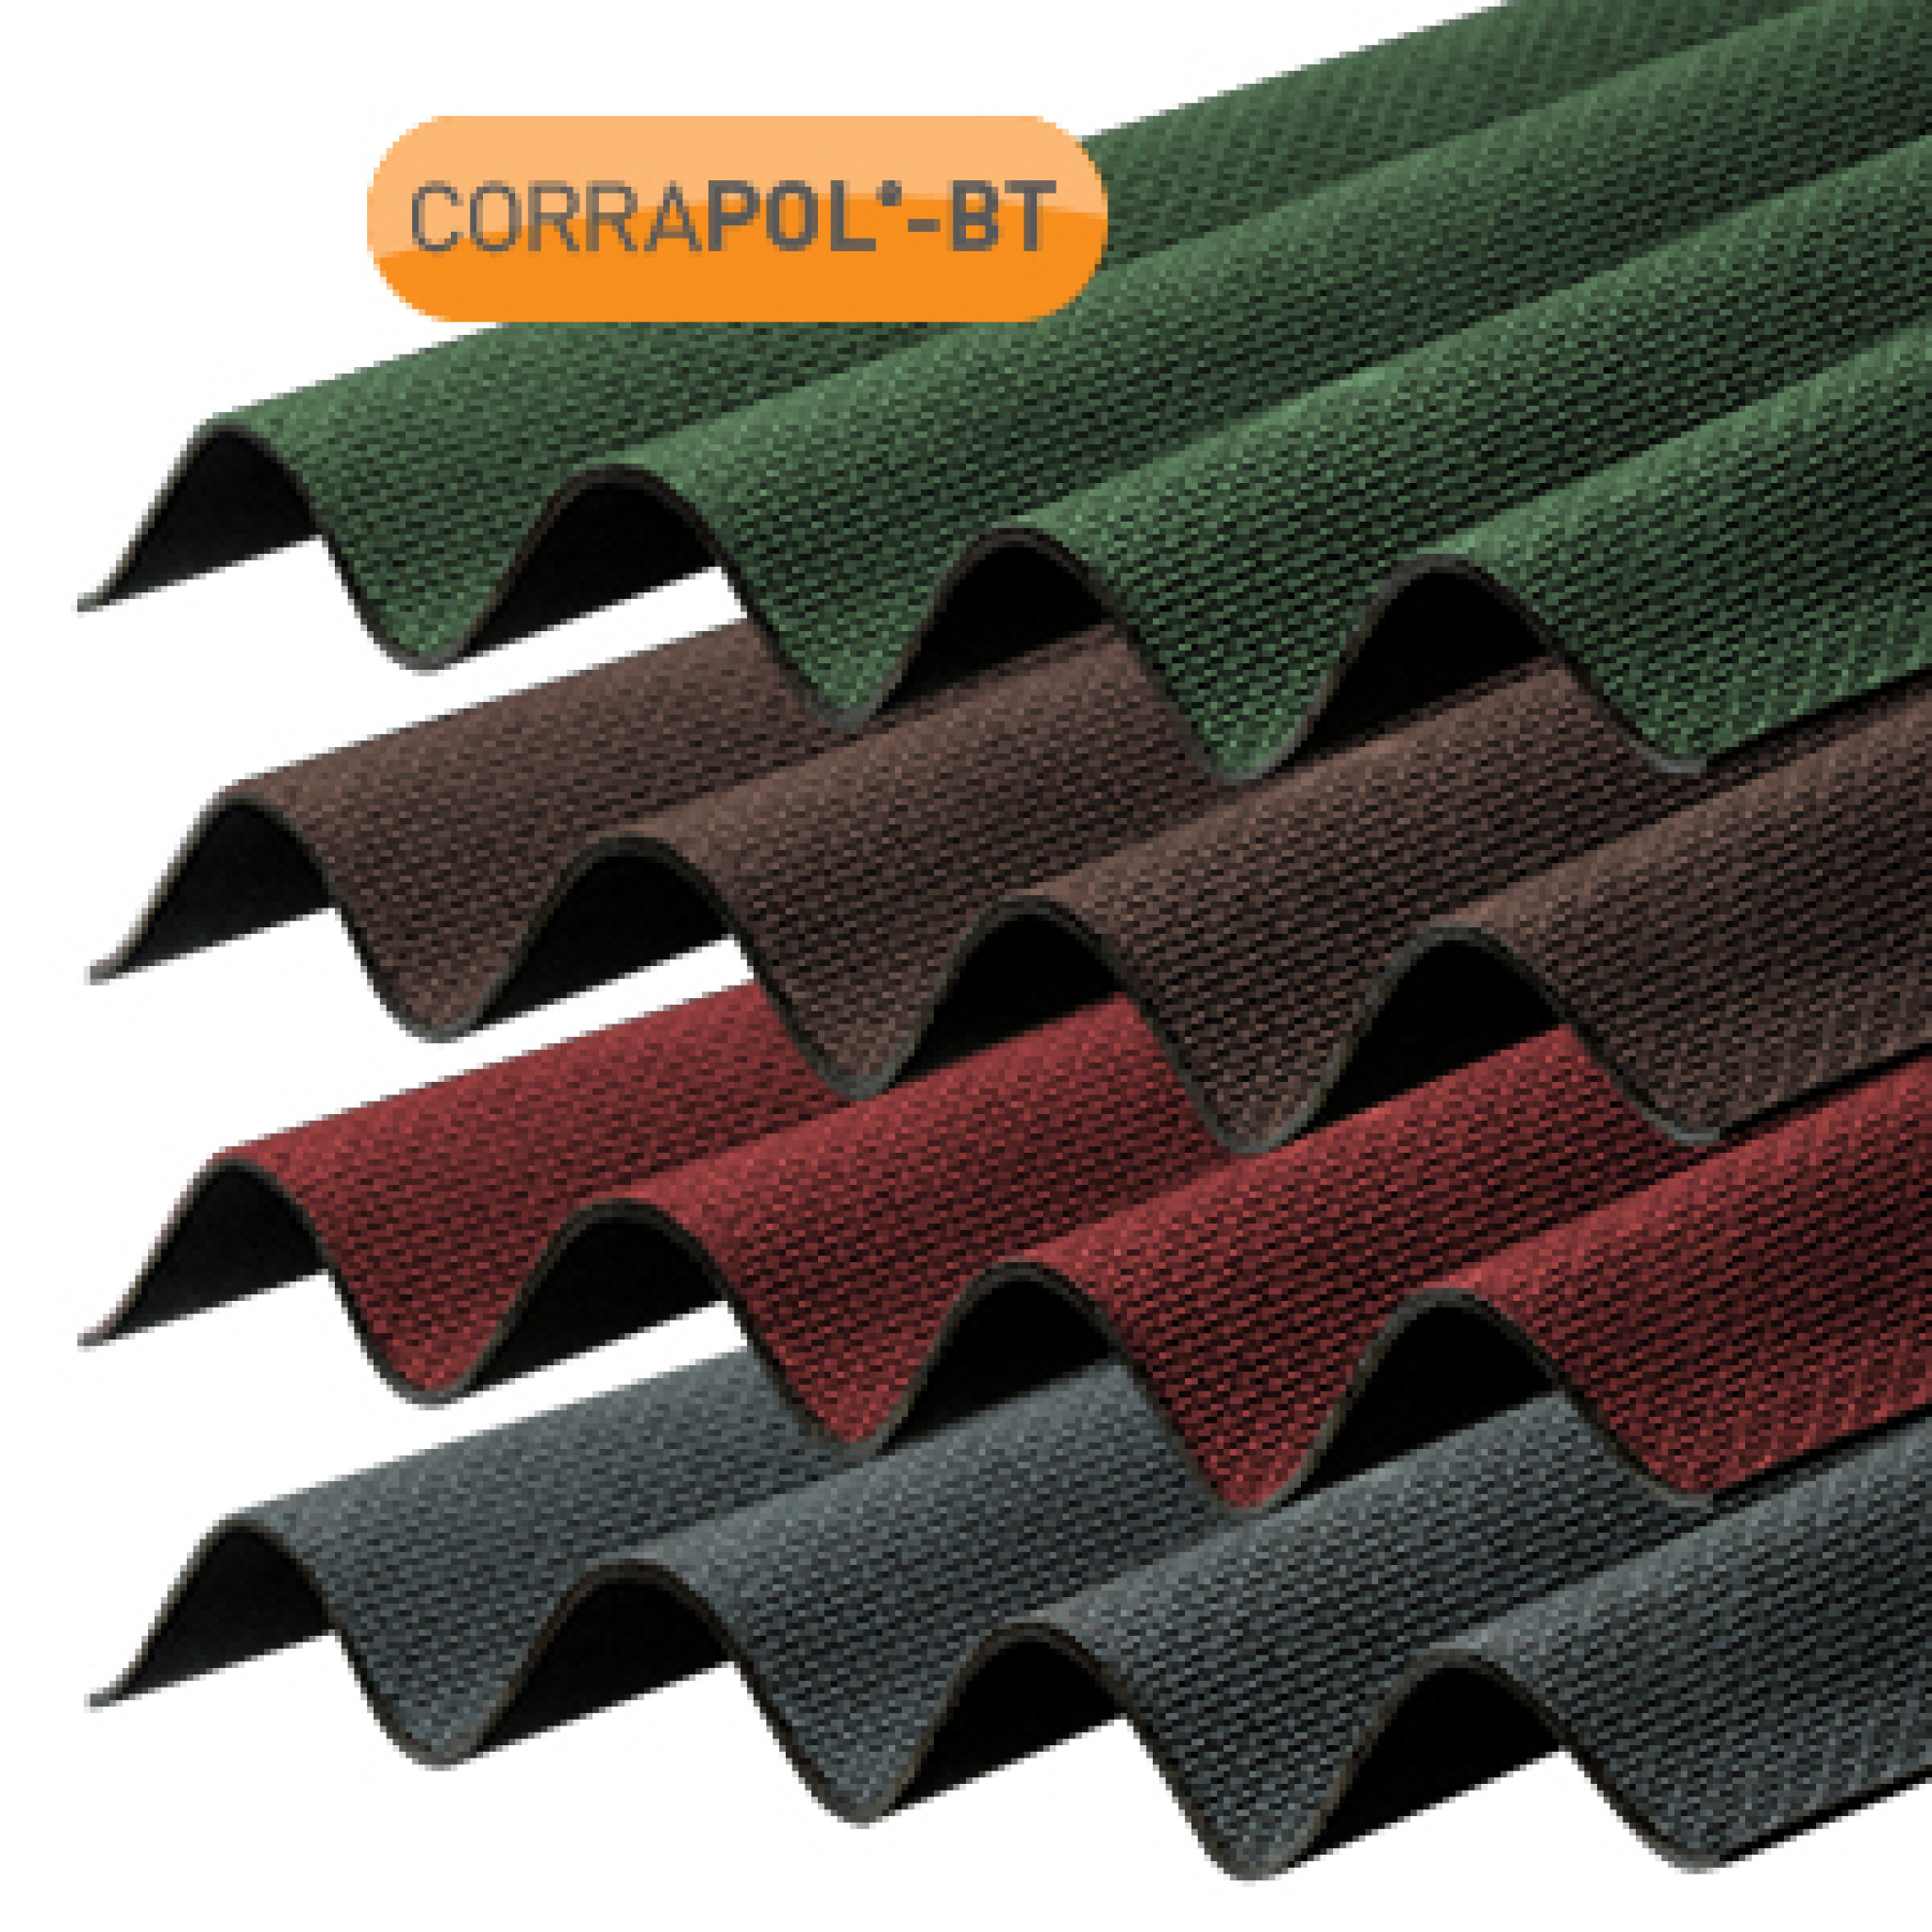 CORRAPOL�-BT Bitumen Corrugated Sheets_V1.01.jpg